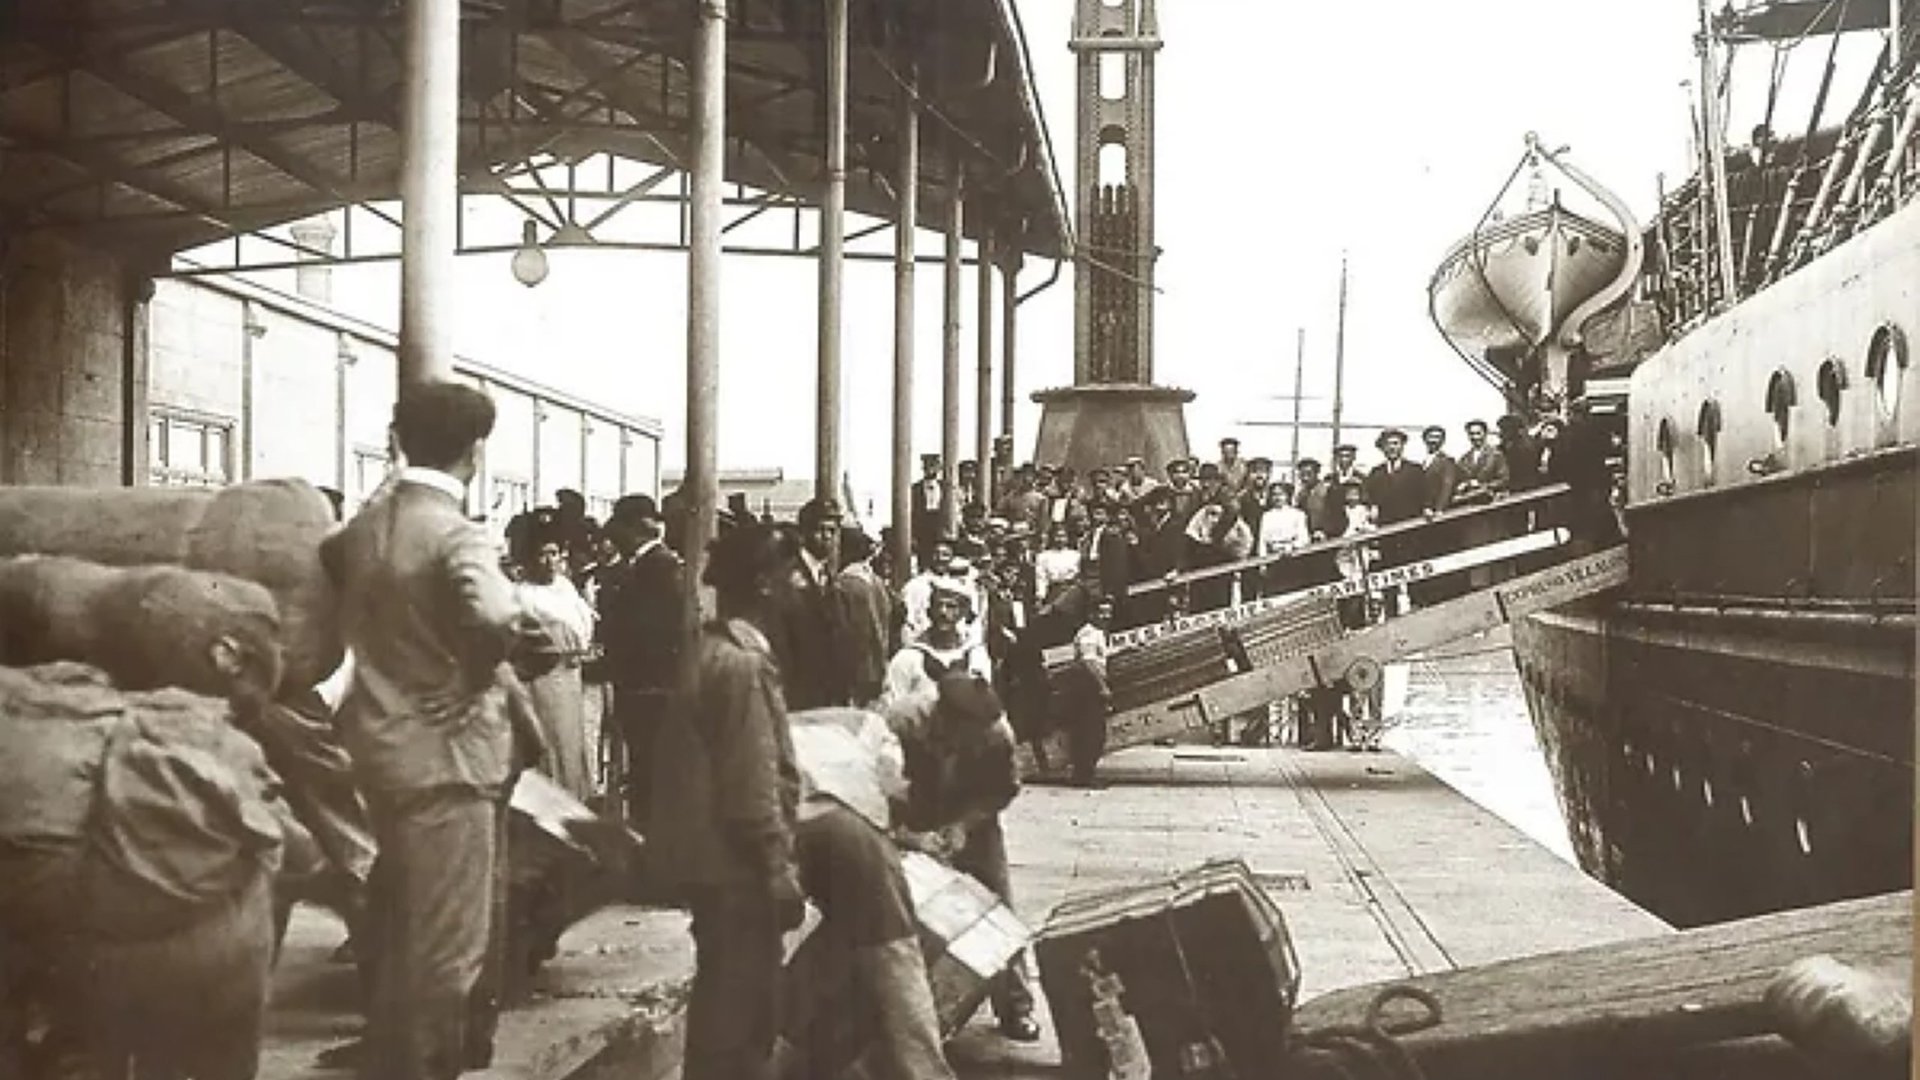 Des migrants débarquent à Buenos Aires, en Argentine. © Archivo General de la Nación